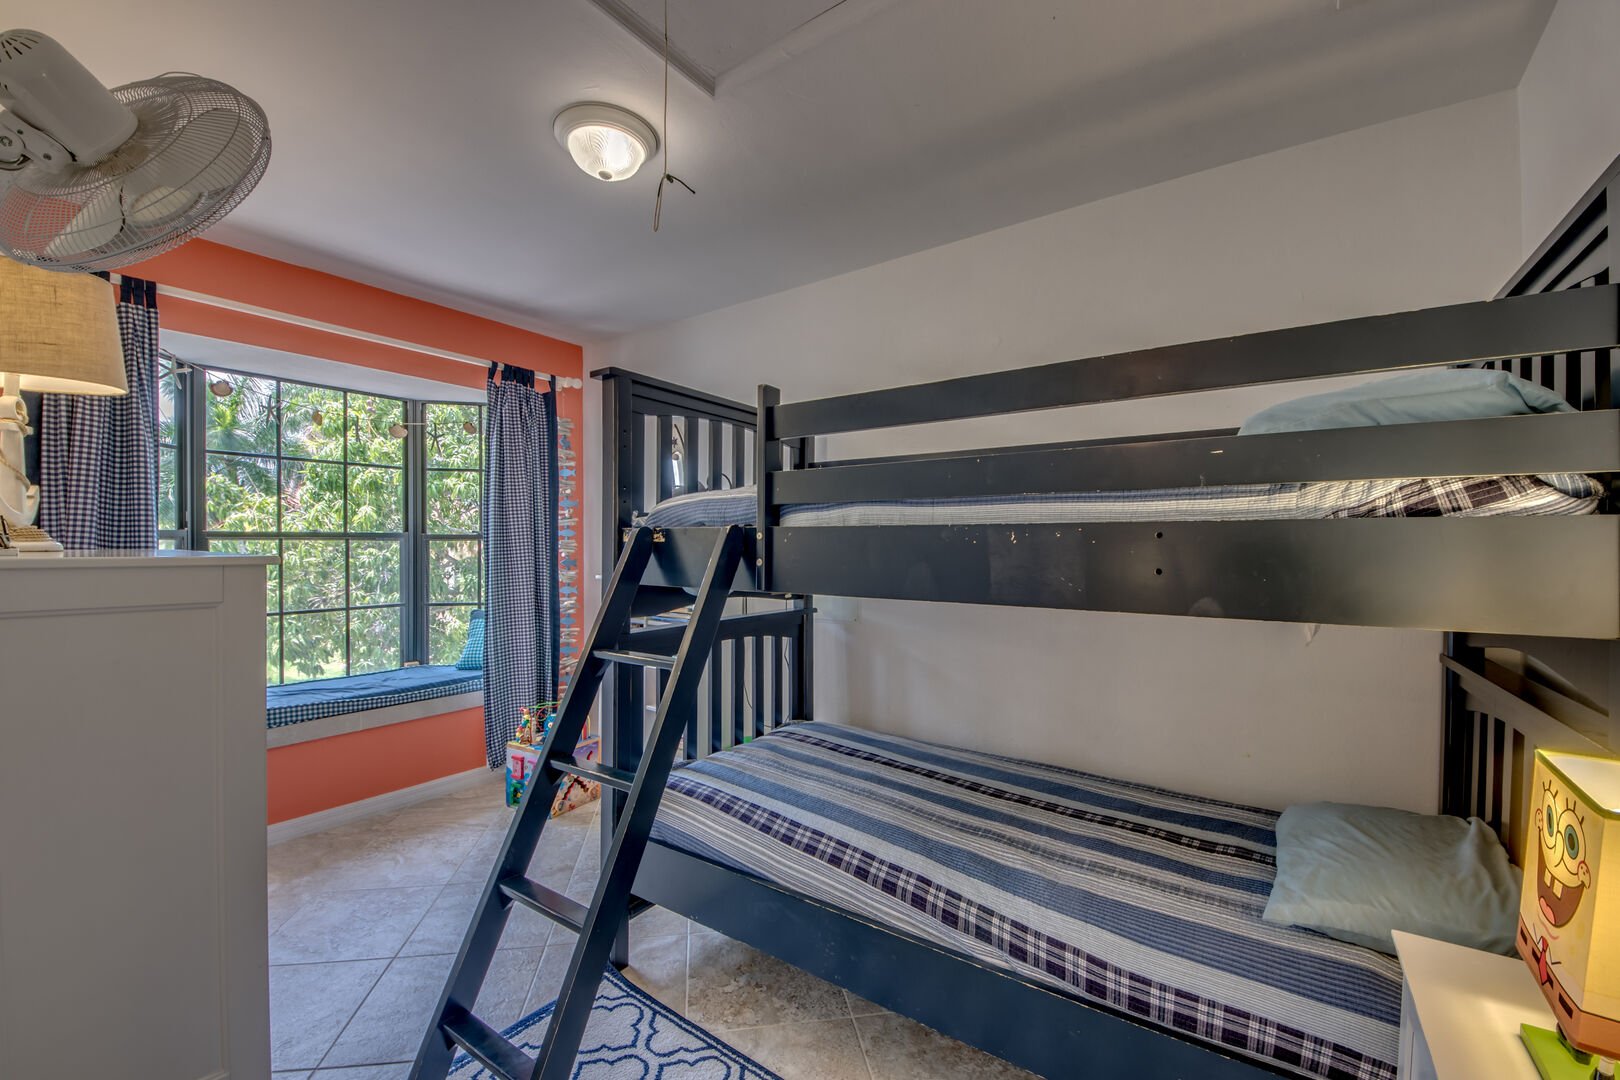 Guest bedroom with bunk beds